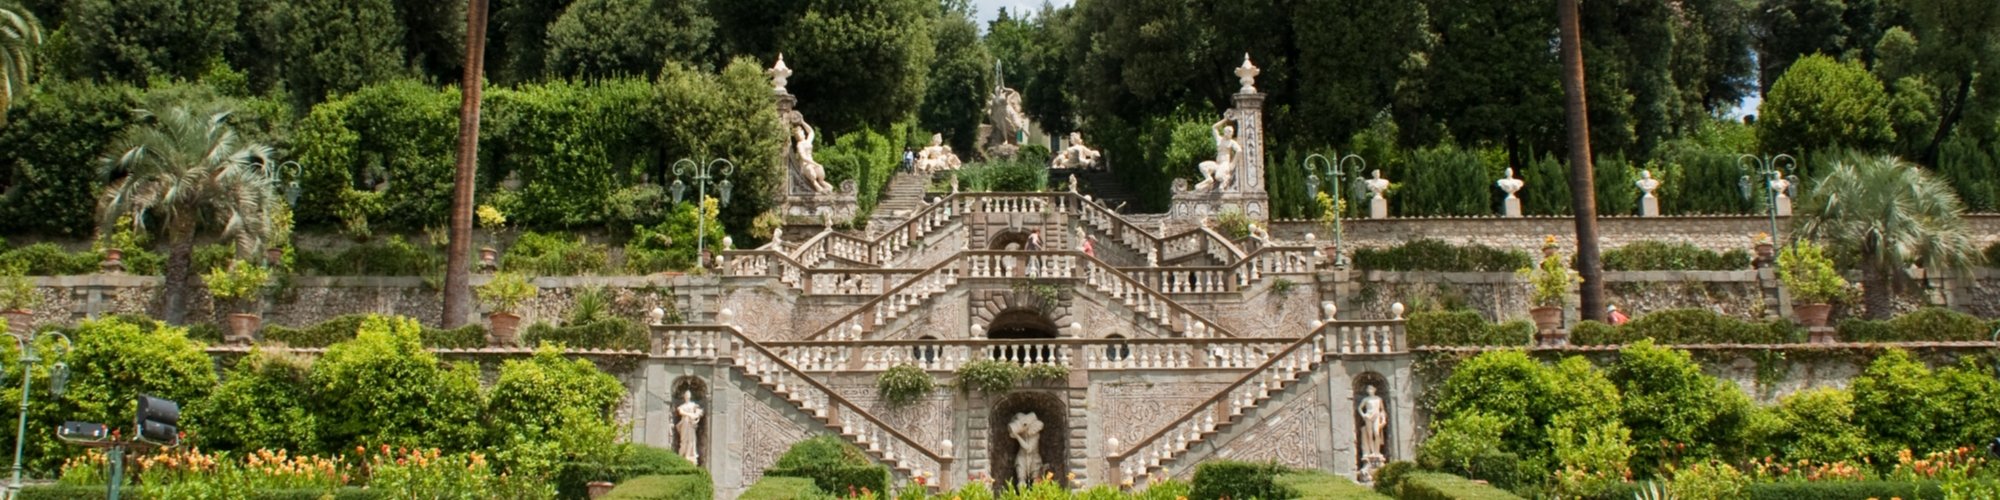 Villa Garzoni, Collodi